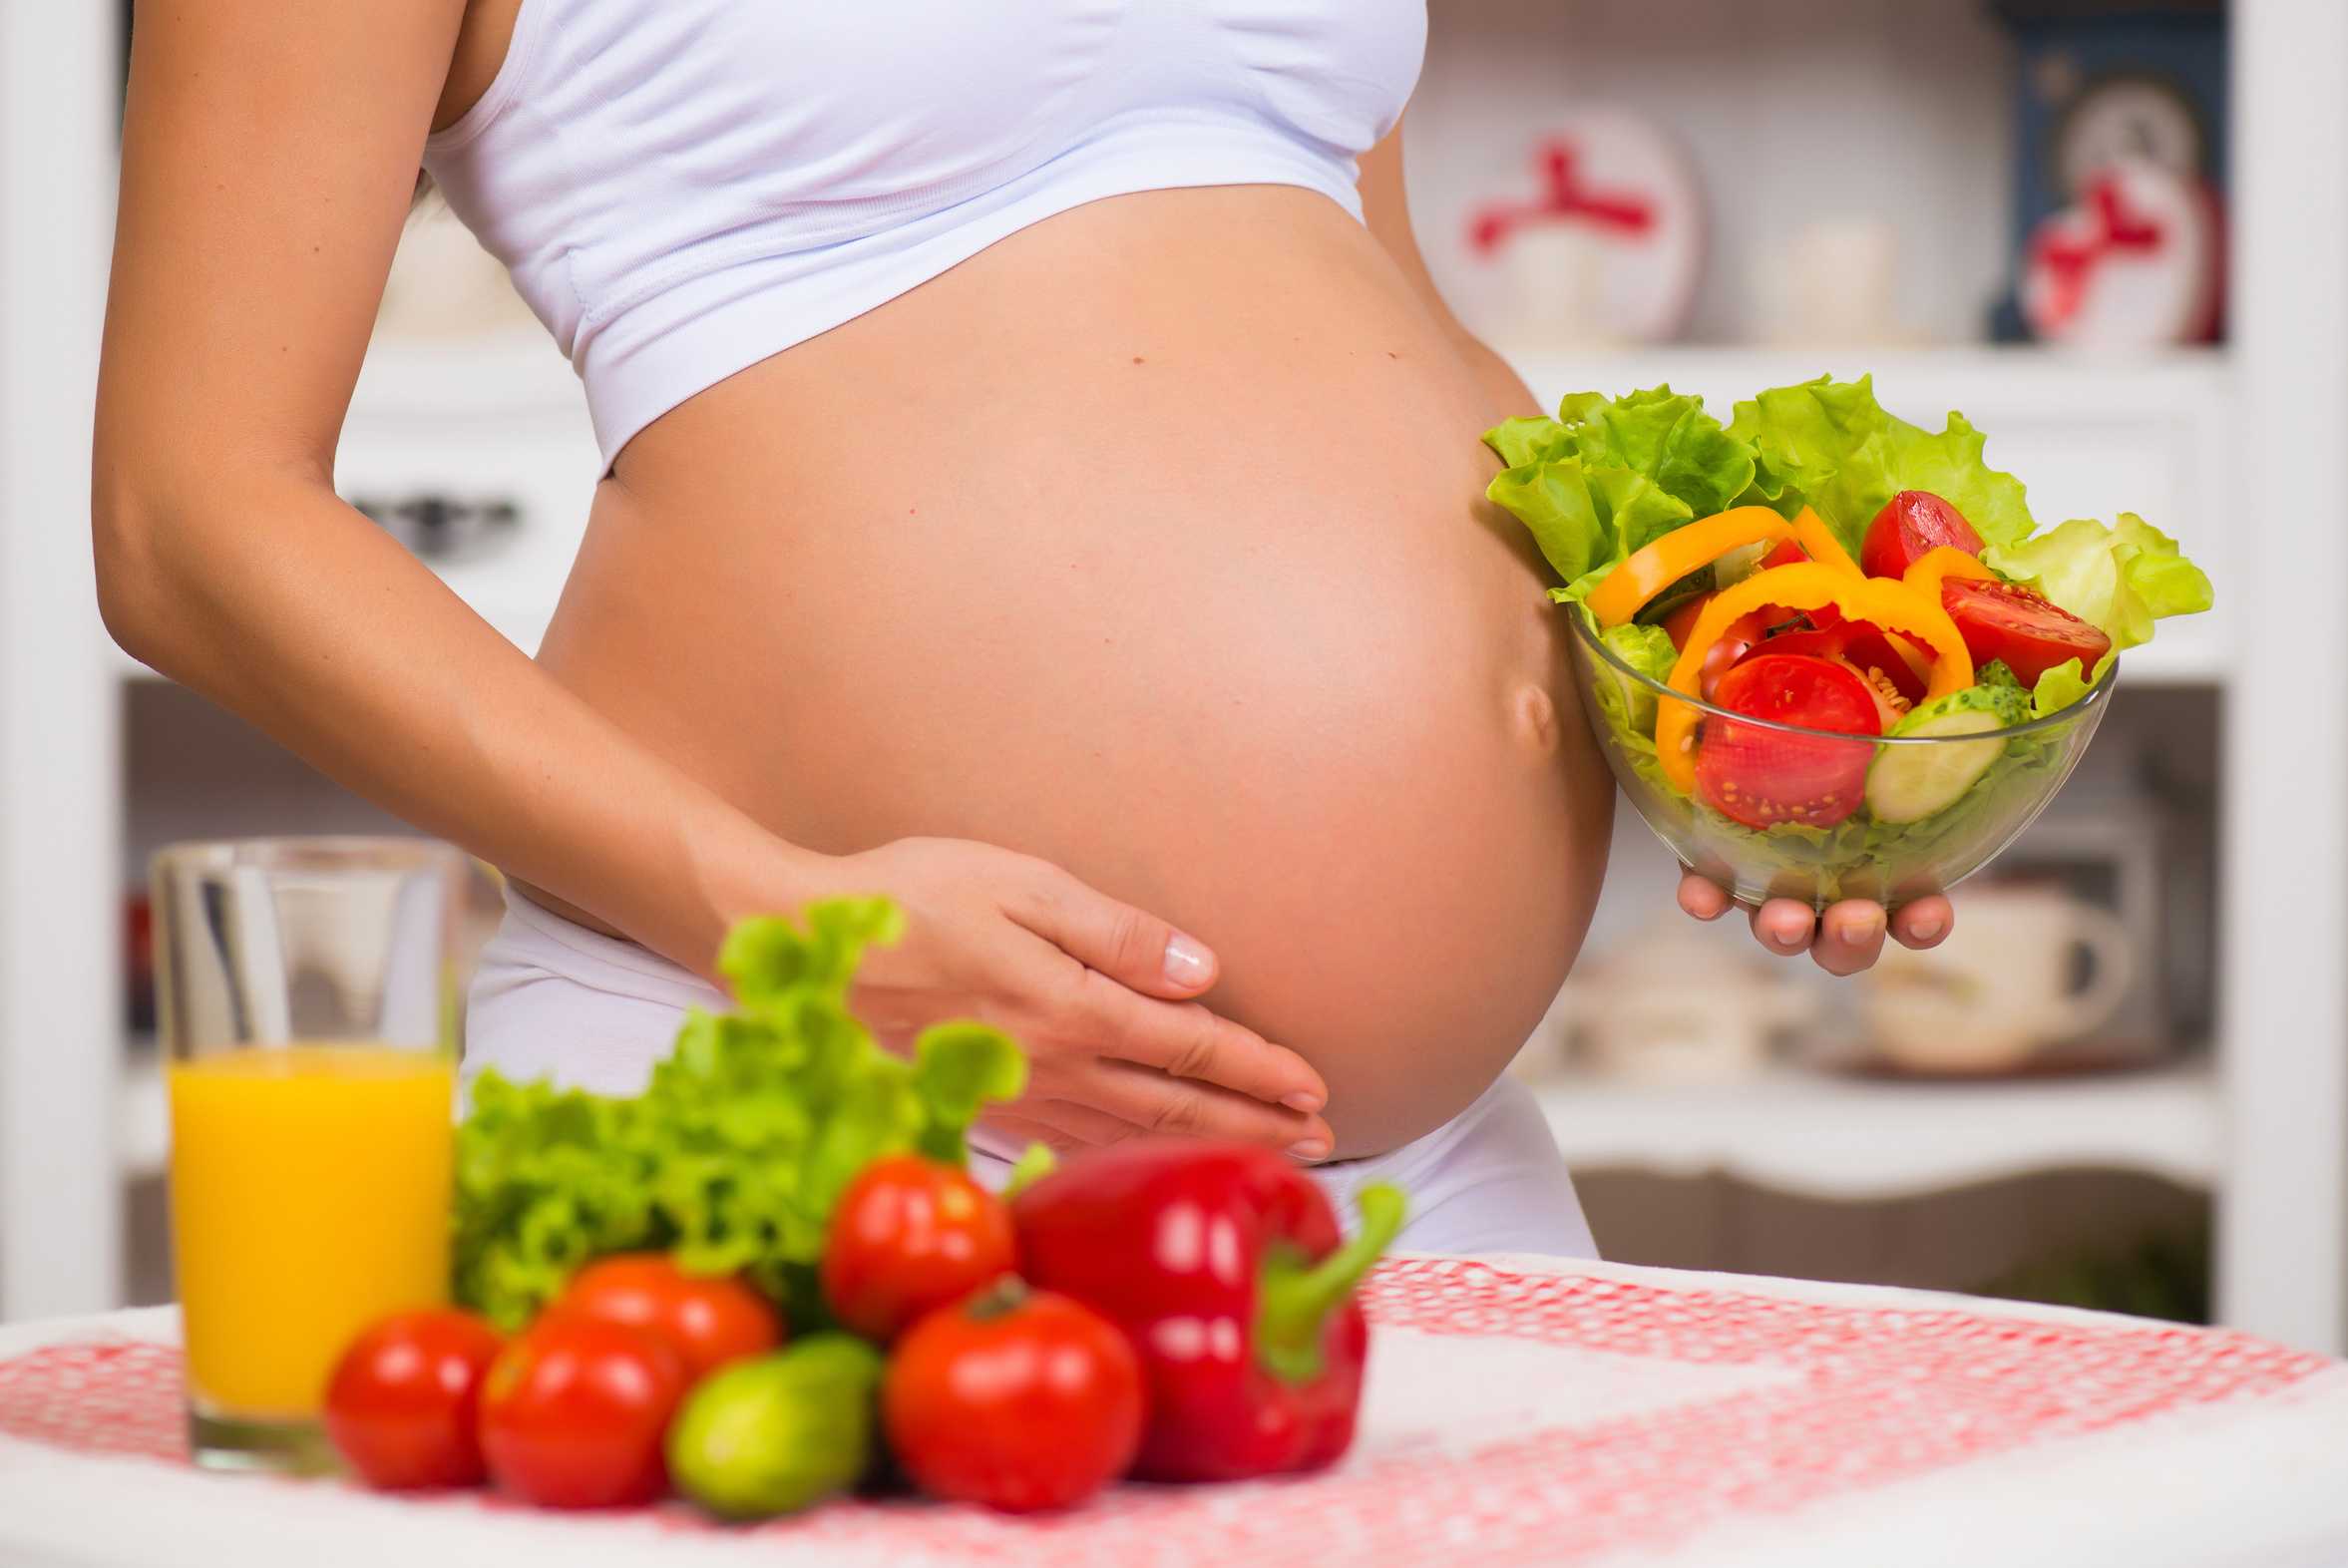 Comer mucha fruta en el embarazo